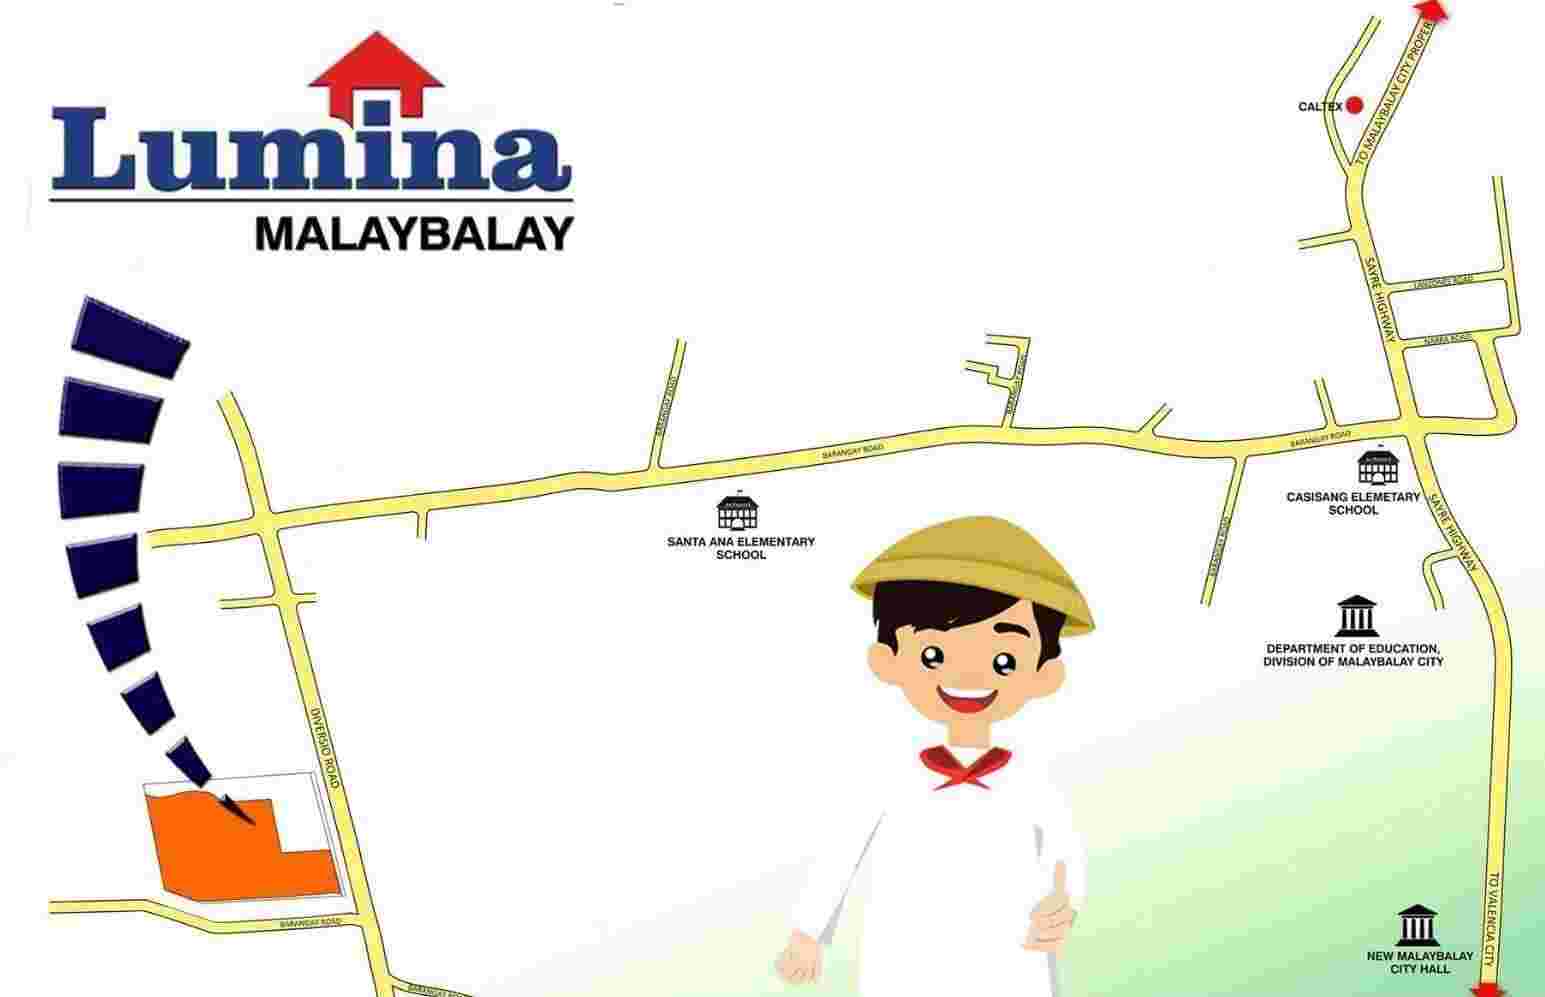 Lumina-Malaybalay-1639380257.jpg